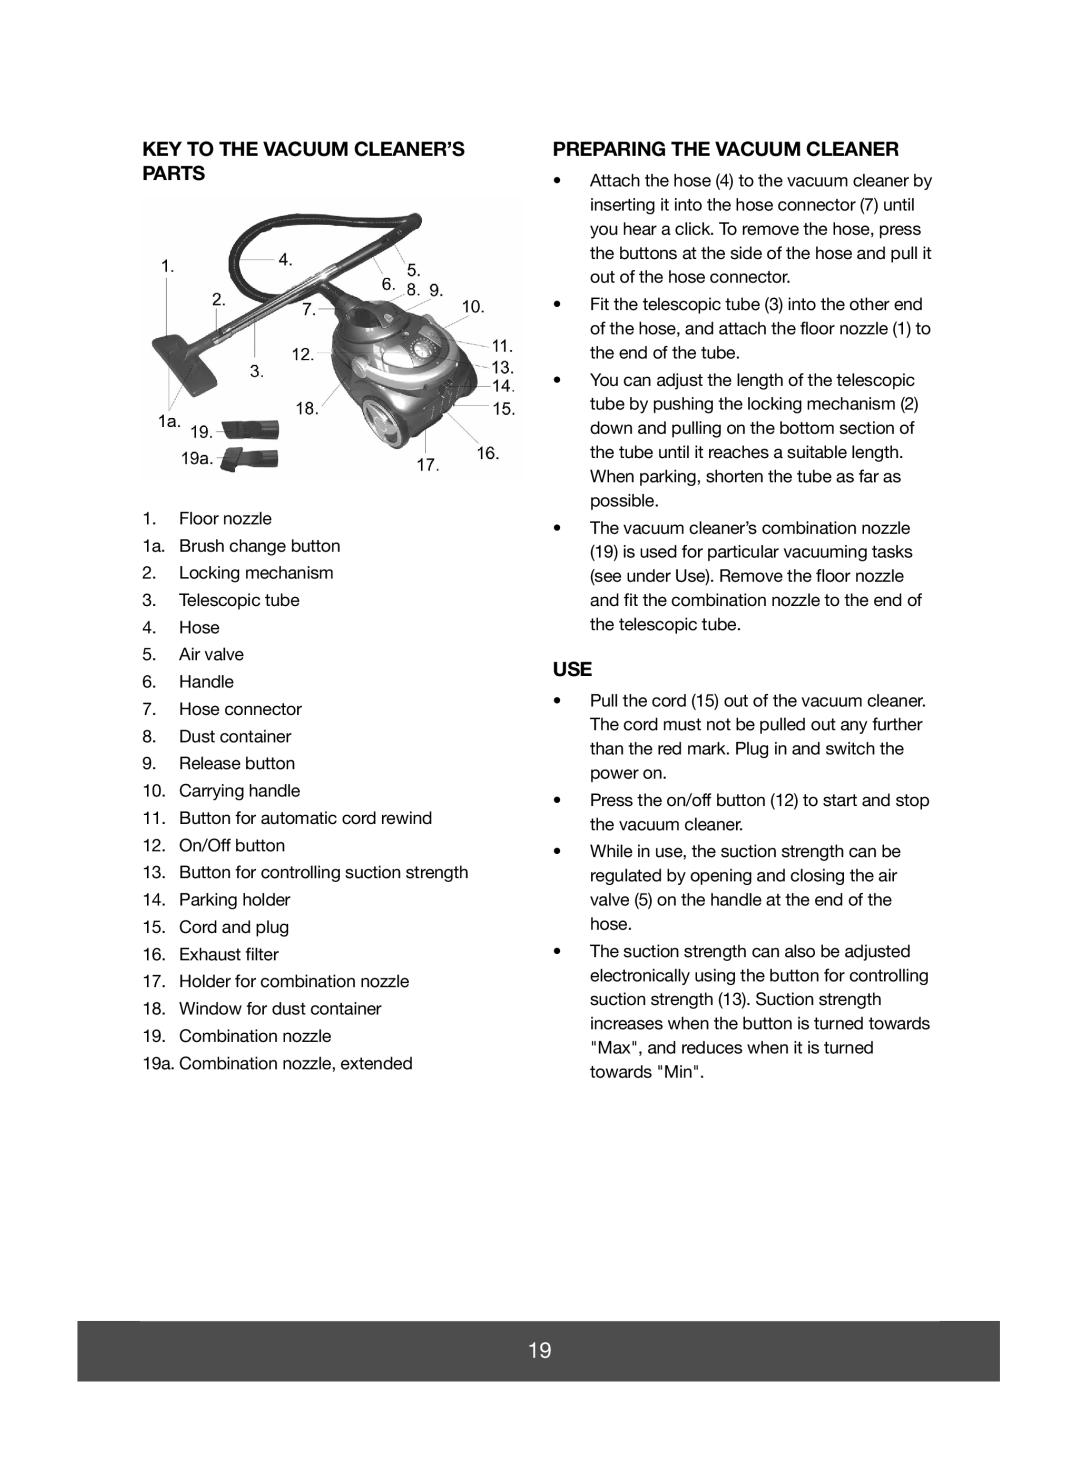 Melissa 740-110 manual Key To The Vacuum Cleaner’S Parts, Preparing The Vacuum Cleaner 